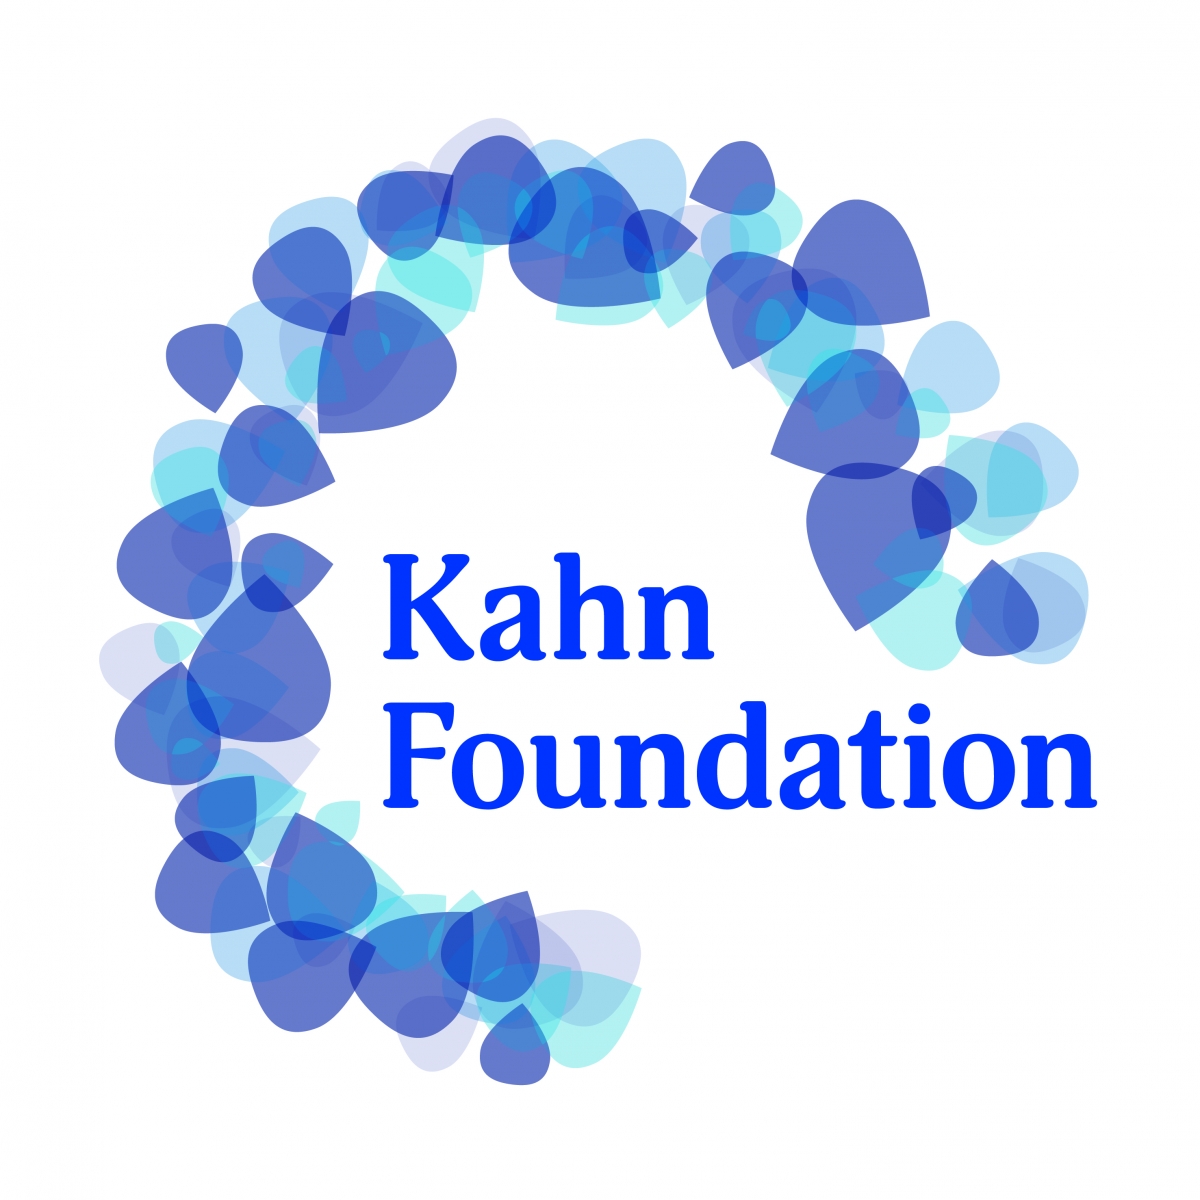 Kahn Foundation